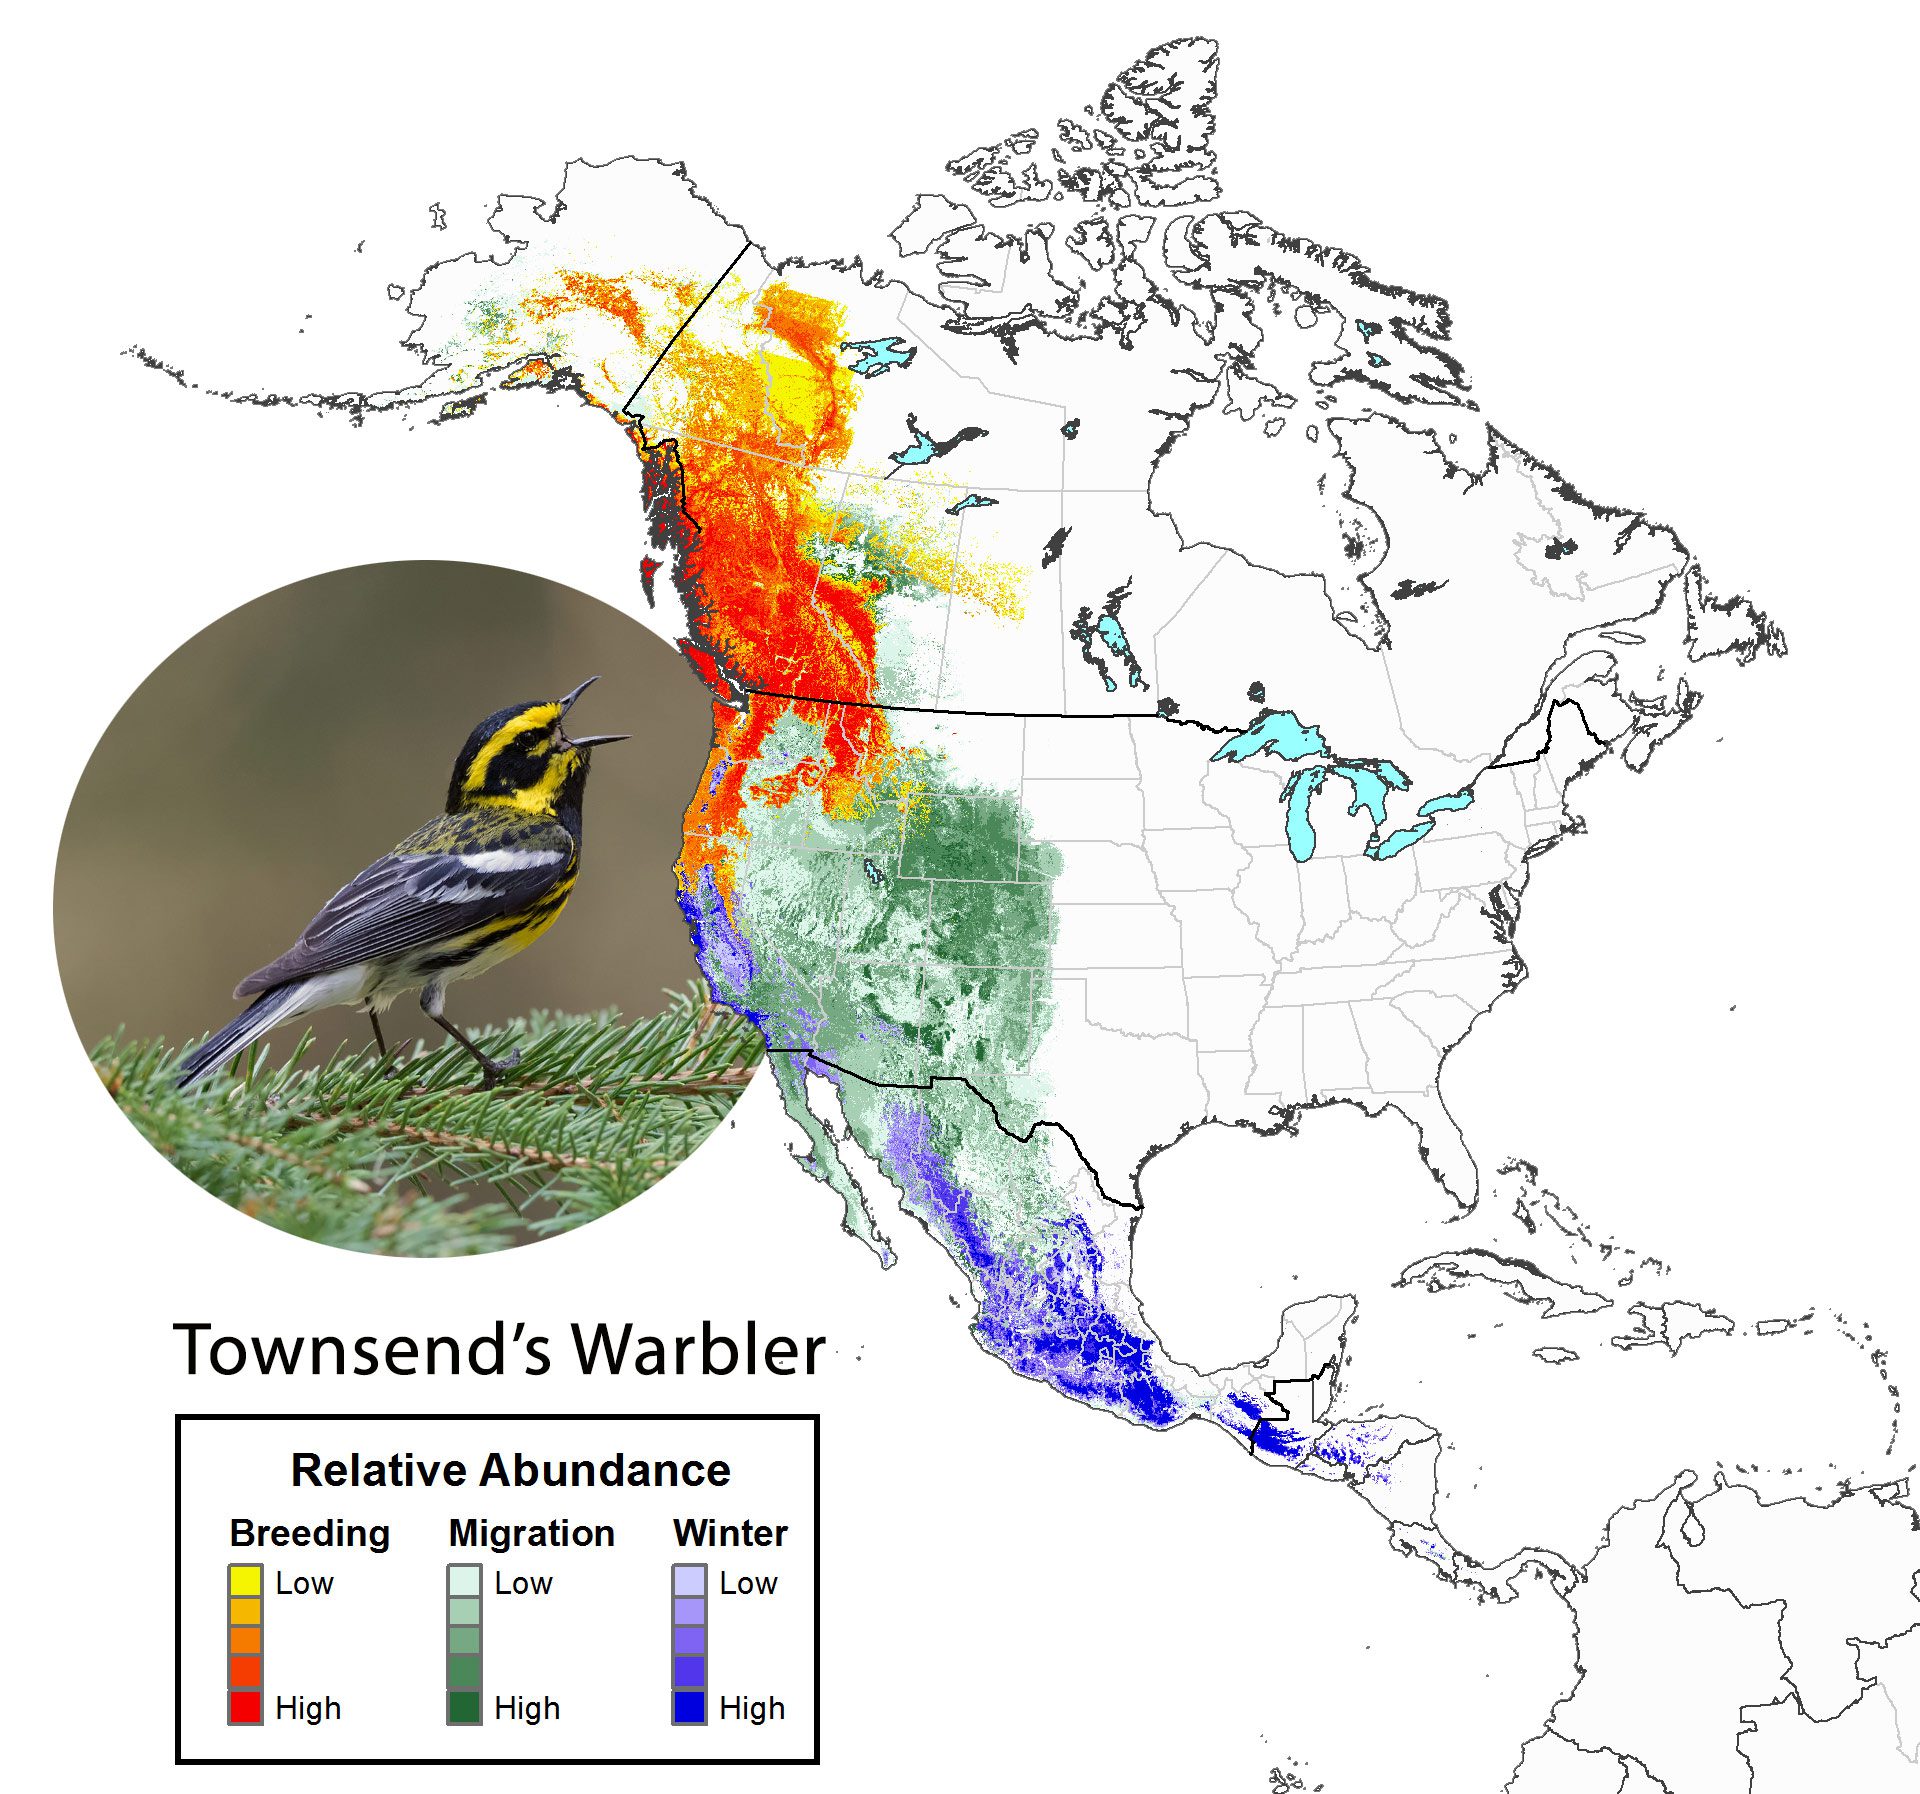 Year-round species abundance for Townsend's Warbler. Photo by COrey Hayes.